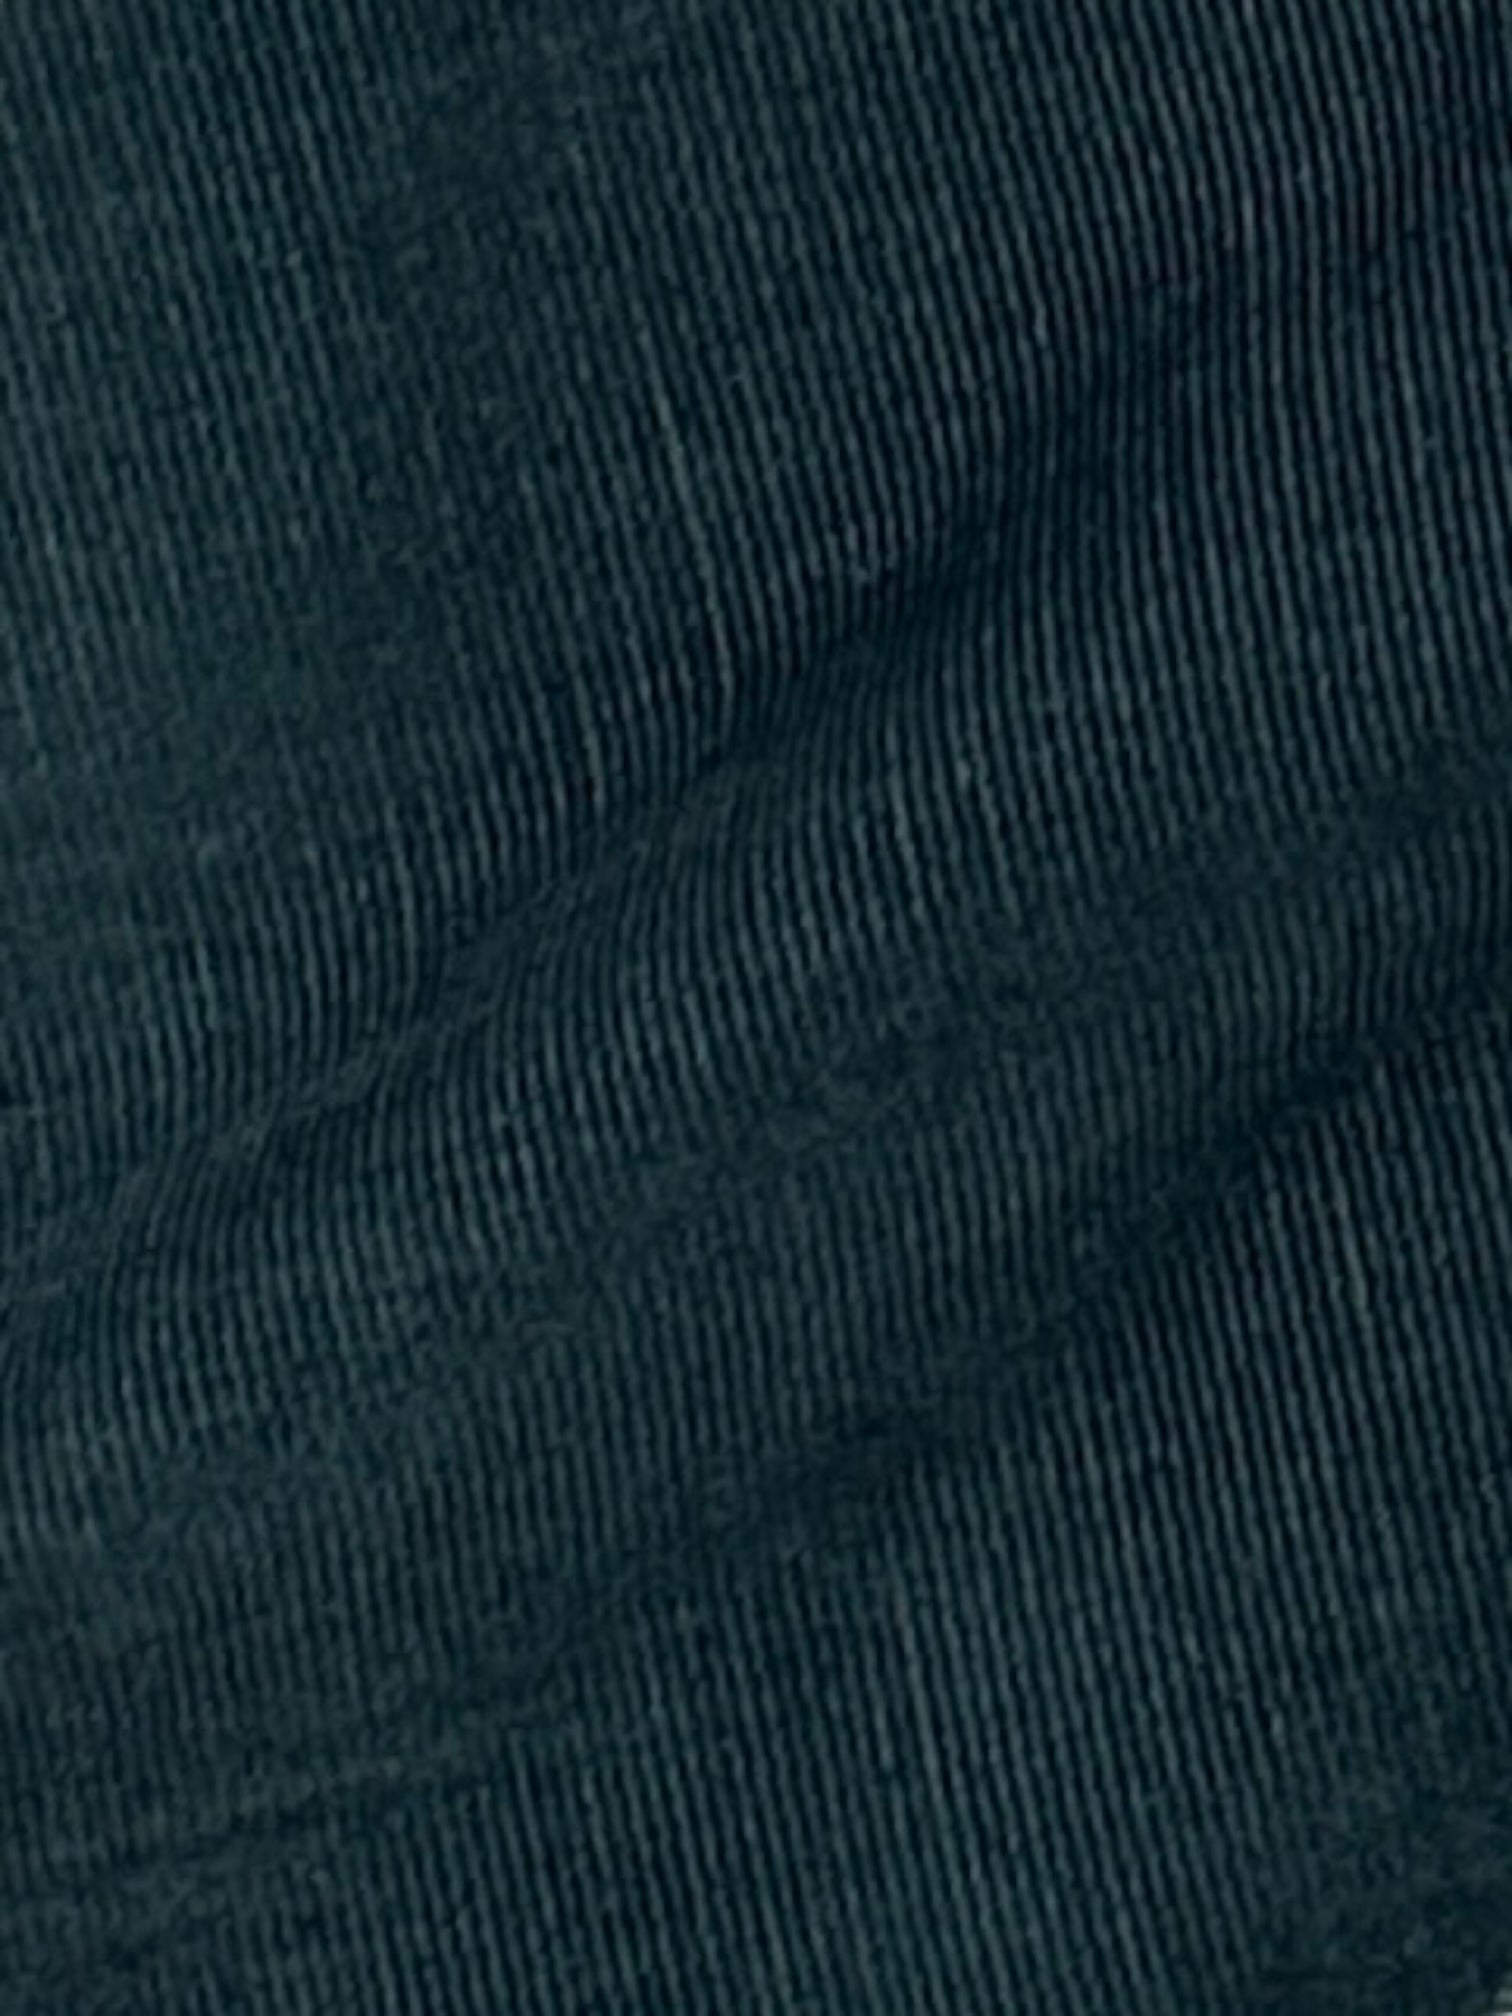 Brioni Black Needlecord Corduroy Cotton Trousers